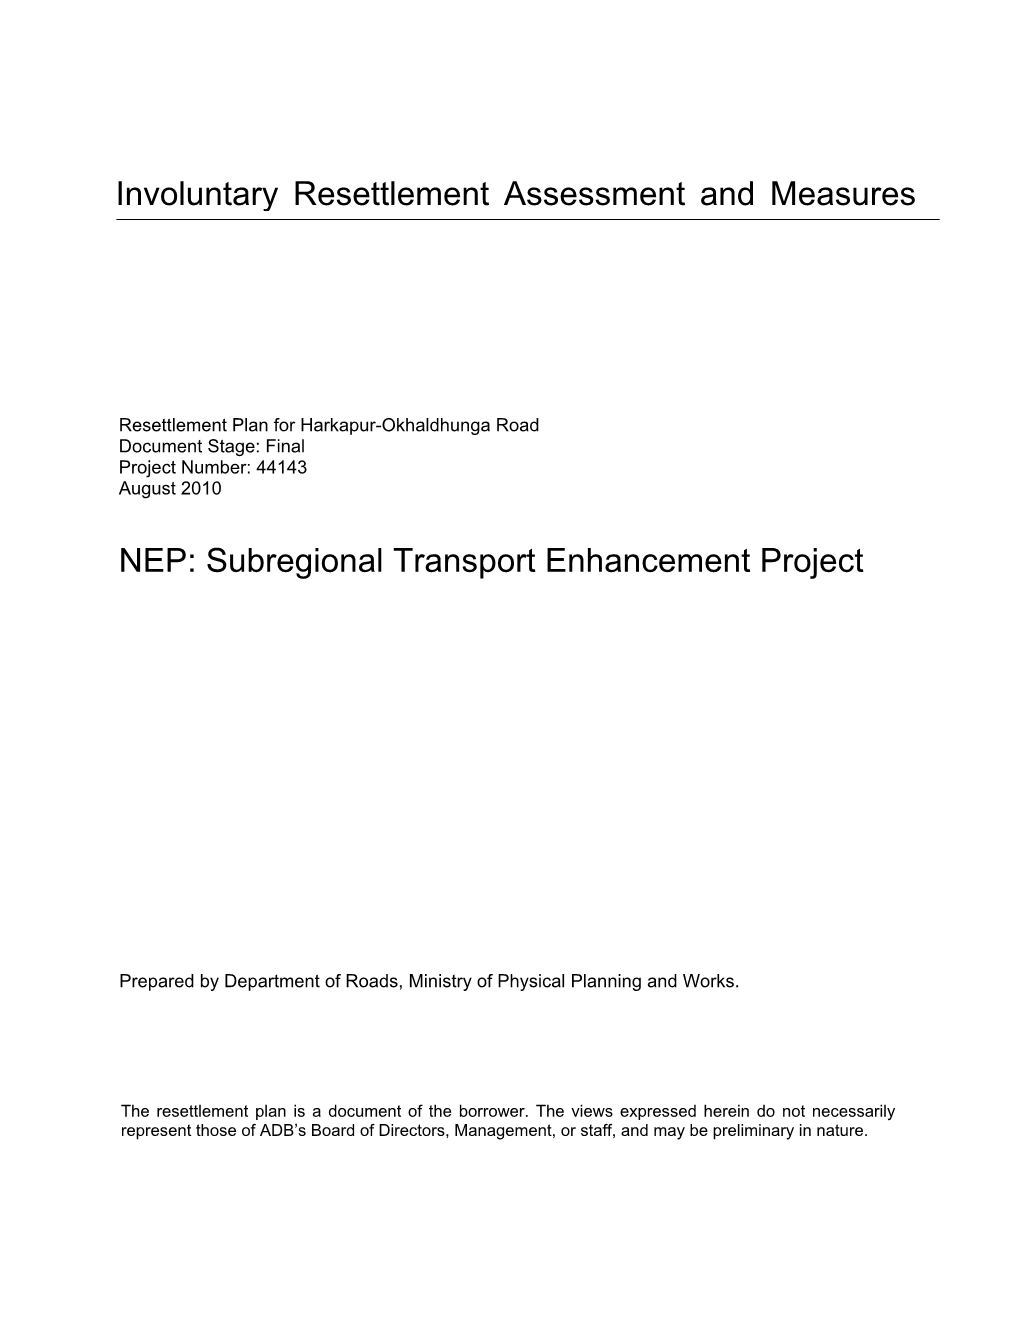 Resettlement Plan for Harkapur-Okhaldhunga Road: Subregional Transport Enhancement Project